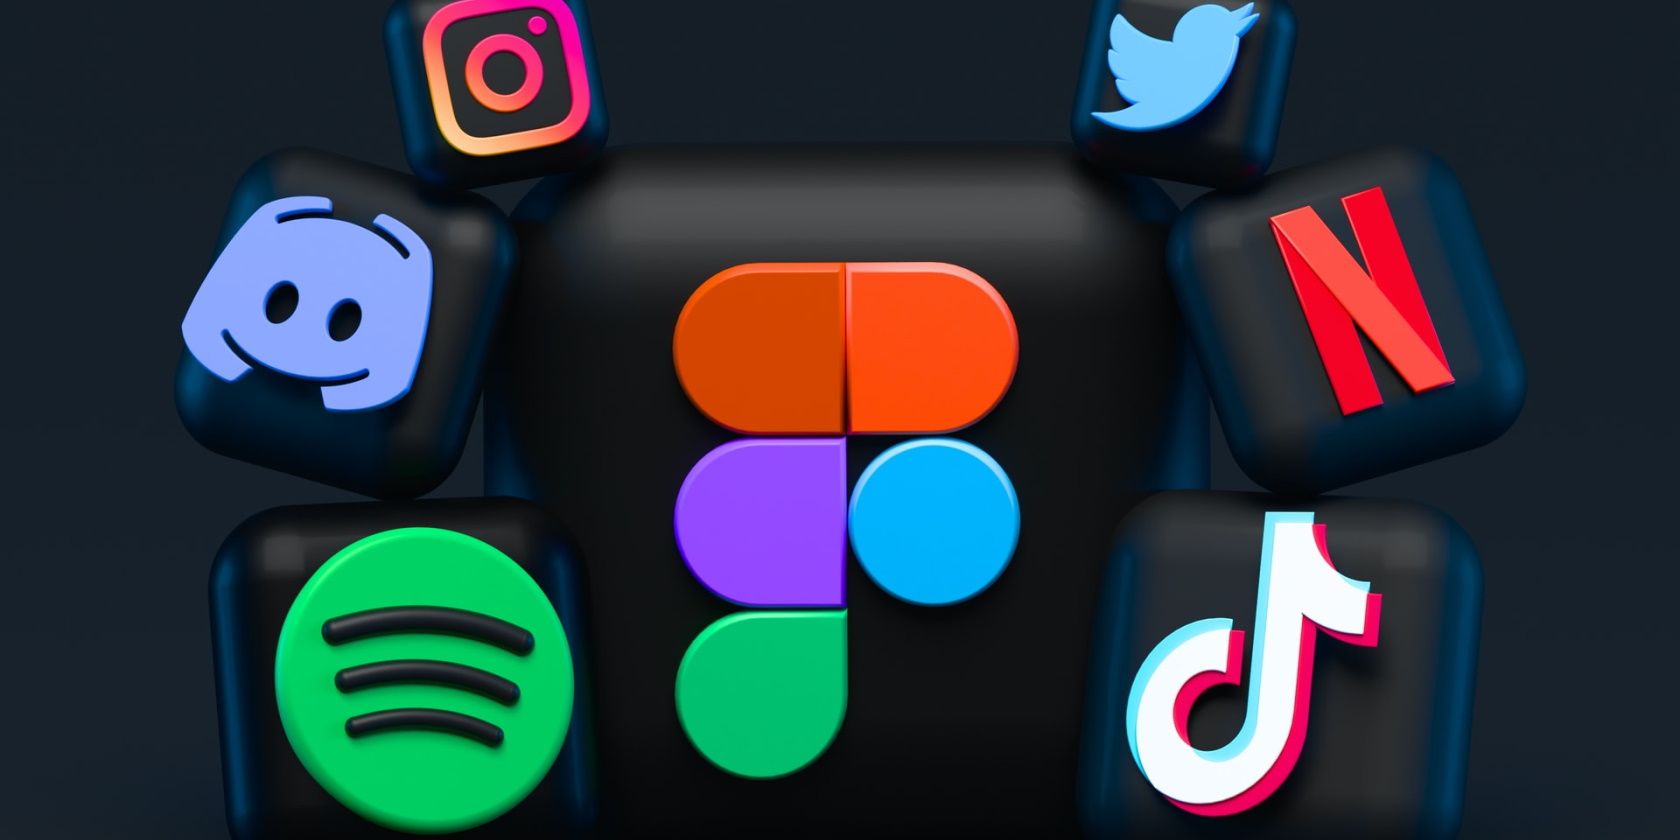 A few apps' logos